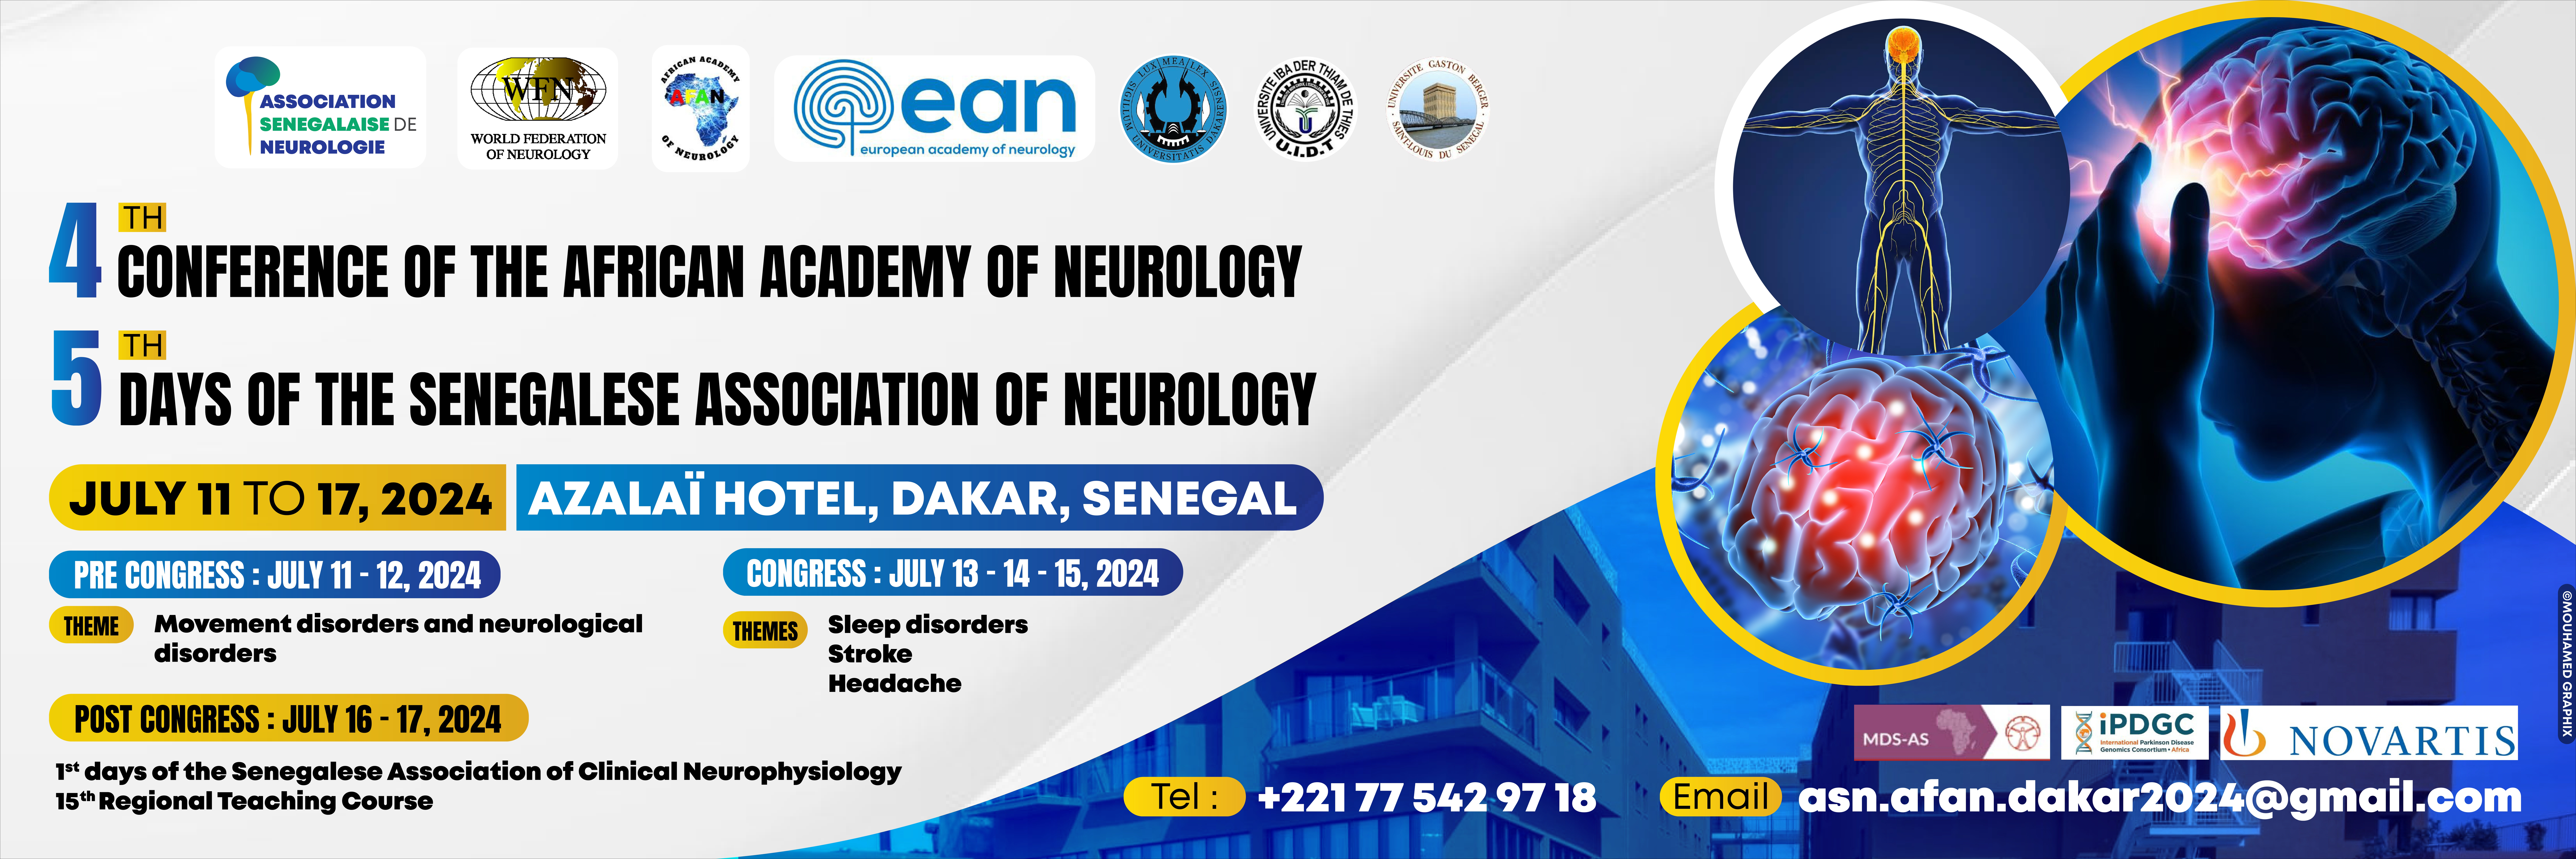 Joint Congress of the African Academy of Neurology (AFAN) and the Senegalease Association of Neurology 2024